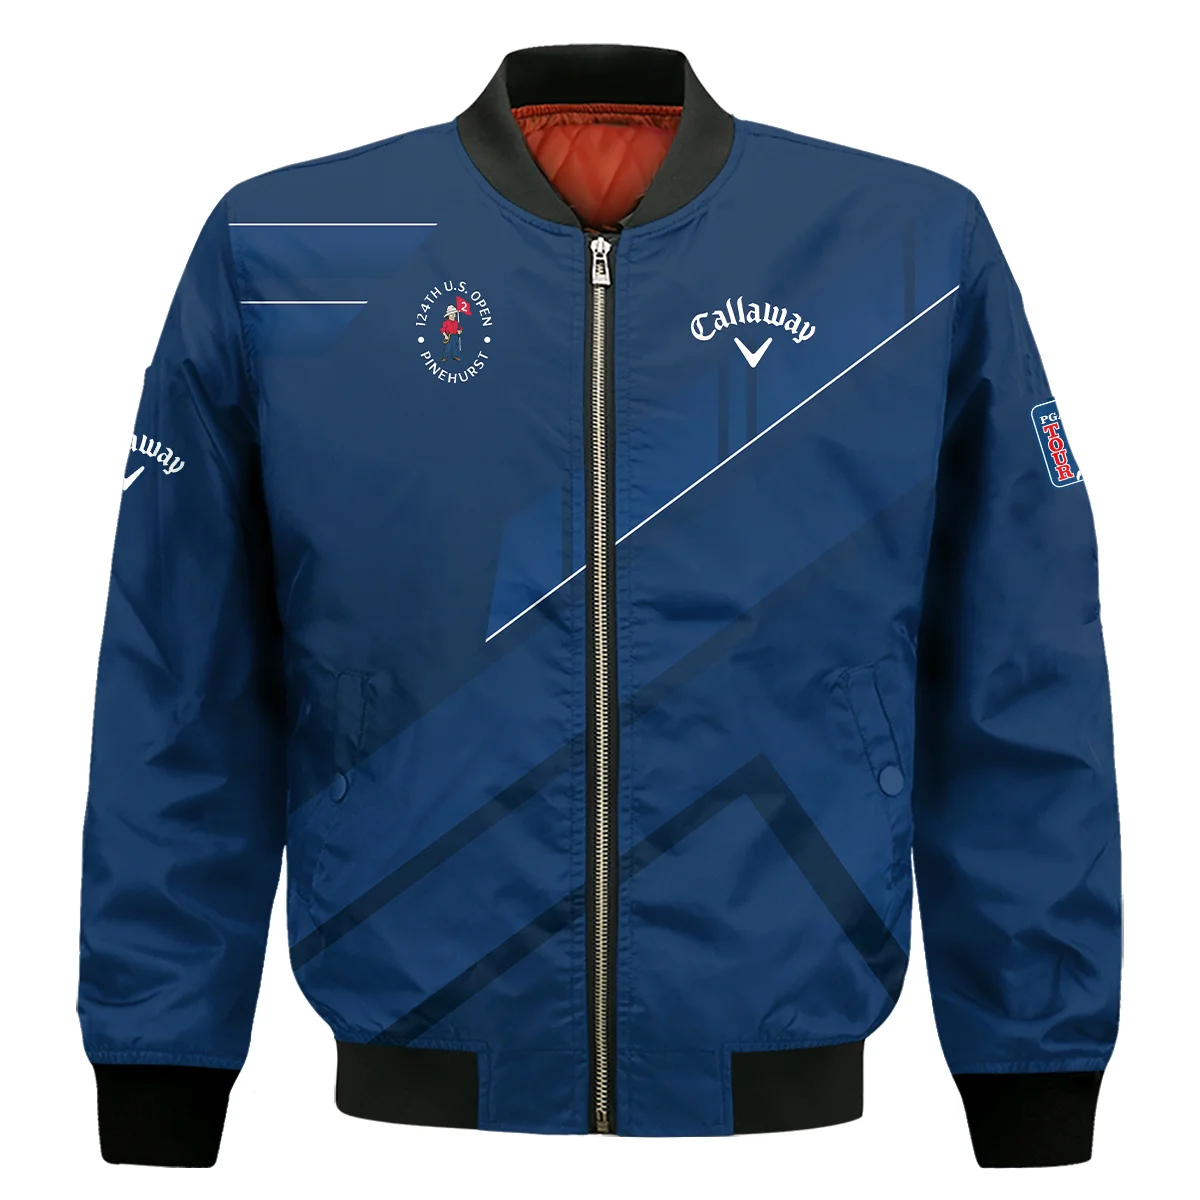 Callaway 124th U.S. Open Pinehurst Blue Gradient With White Straight Line Quarter-Zip Jacket Style Classic Quarter-Zip Jacket